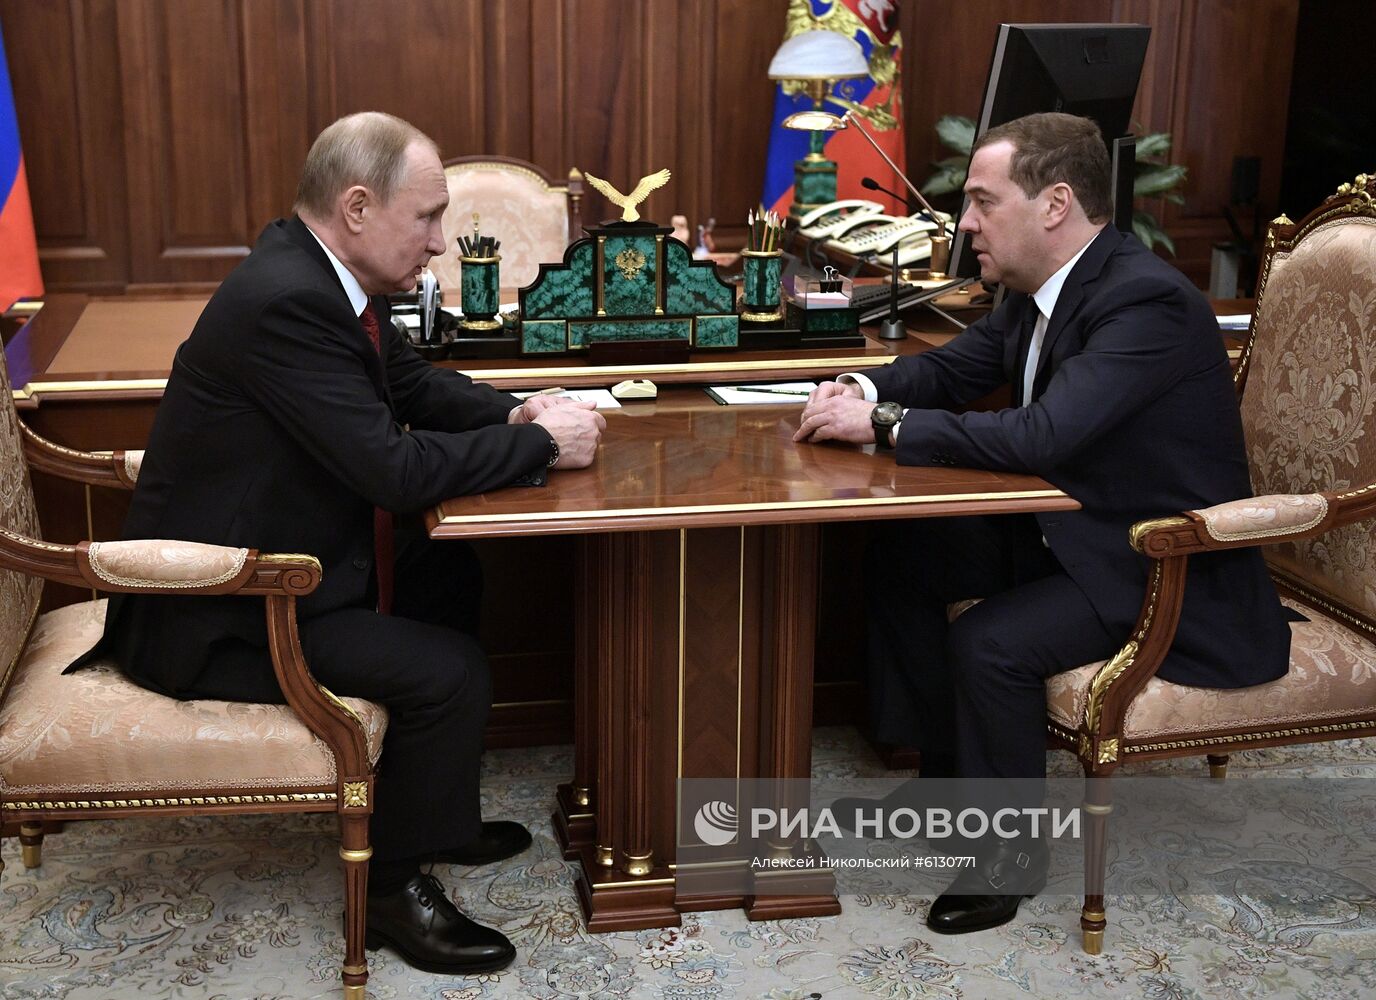 Рабочая встреча президента РФ В. Путина и премьер-министра РФ Д. Медведева